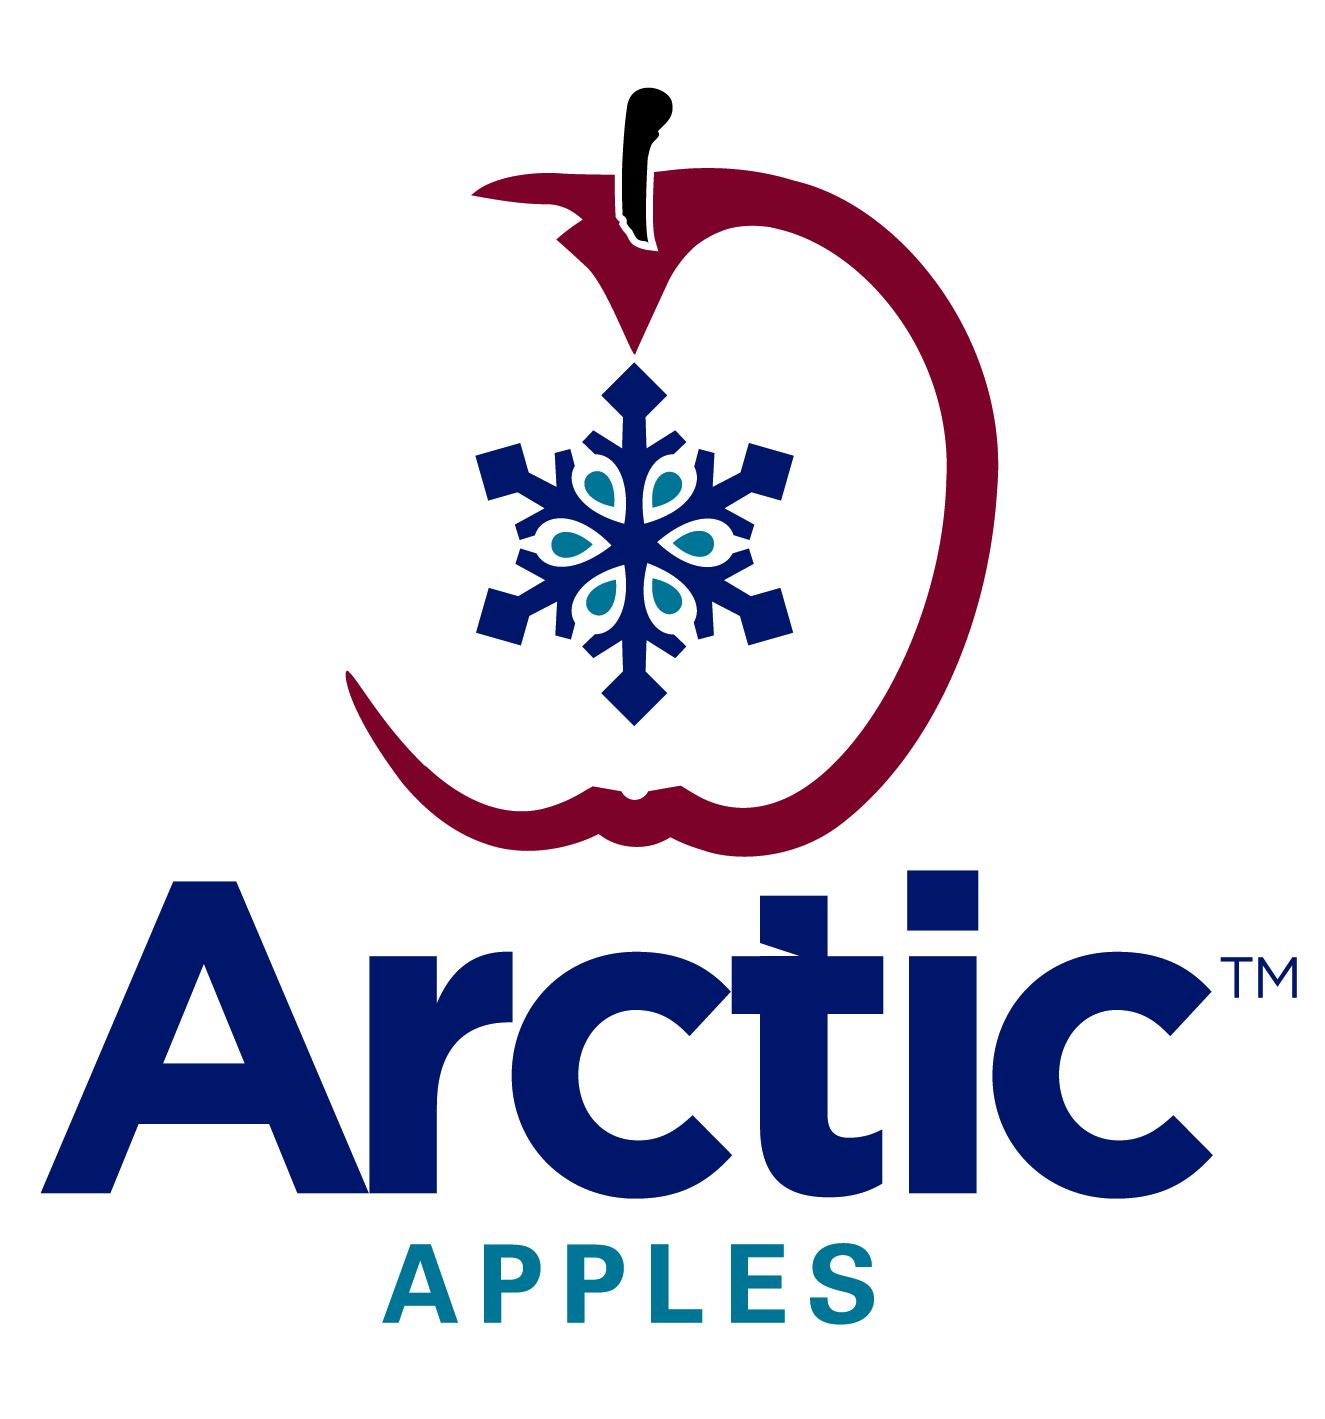 Arctic Apples